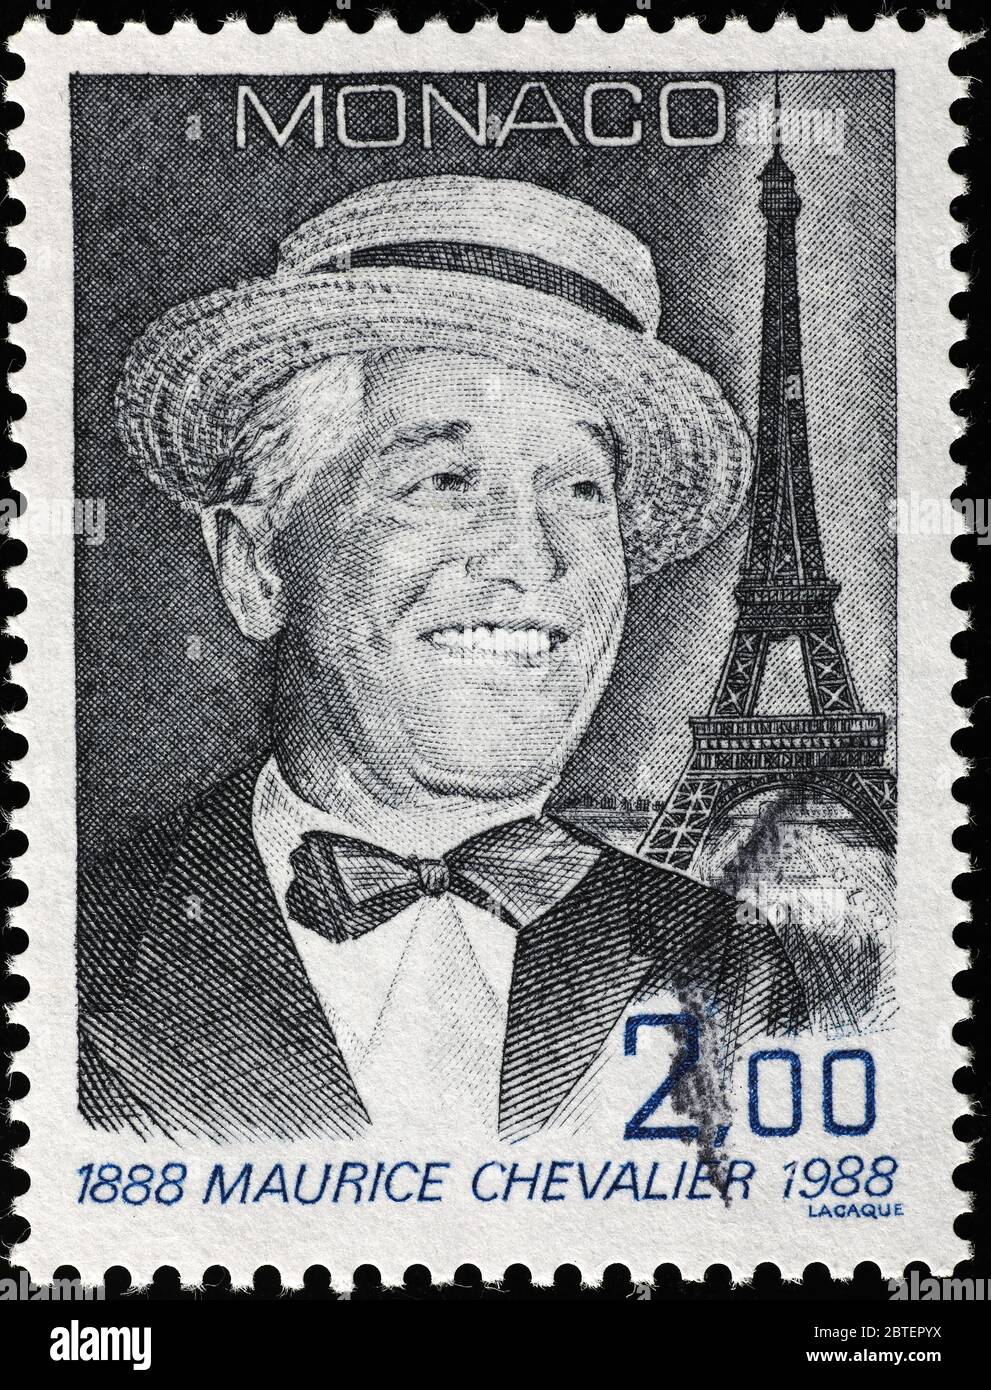 Maurice Chevalier on postage stamp of Monaco Stock Photo